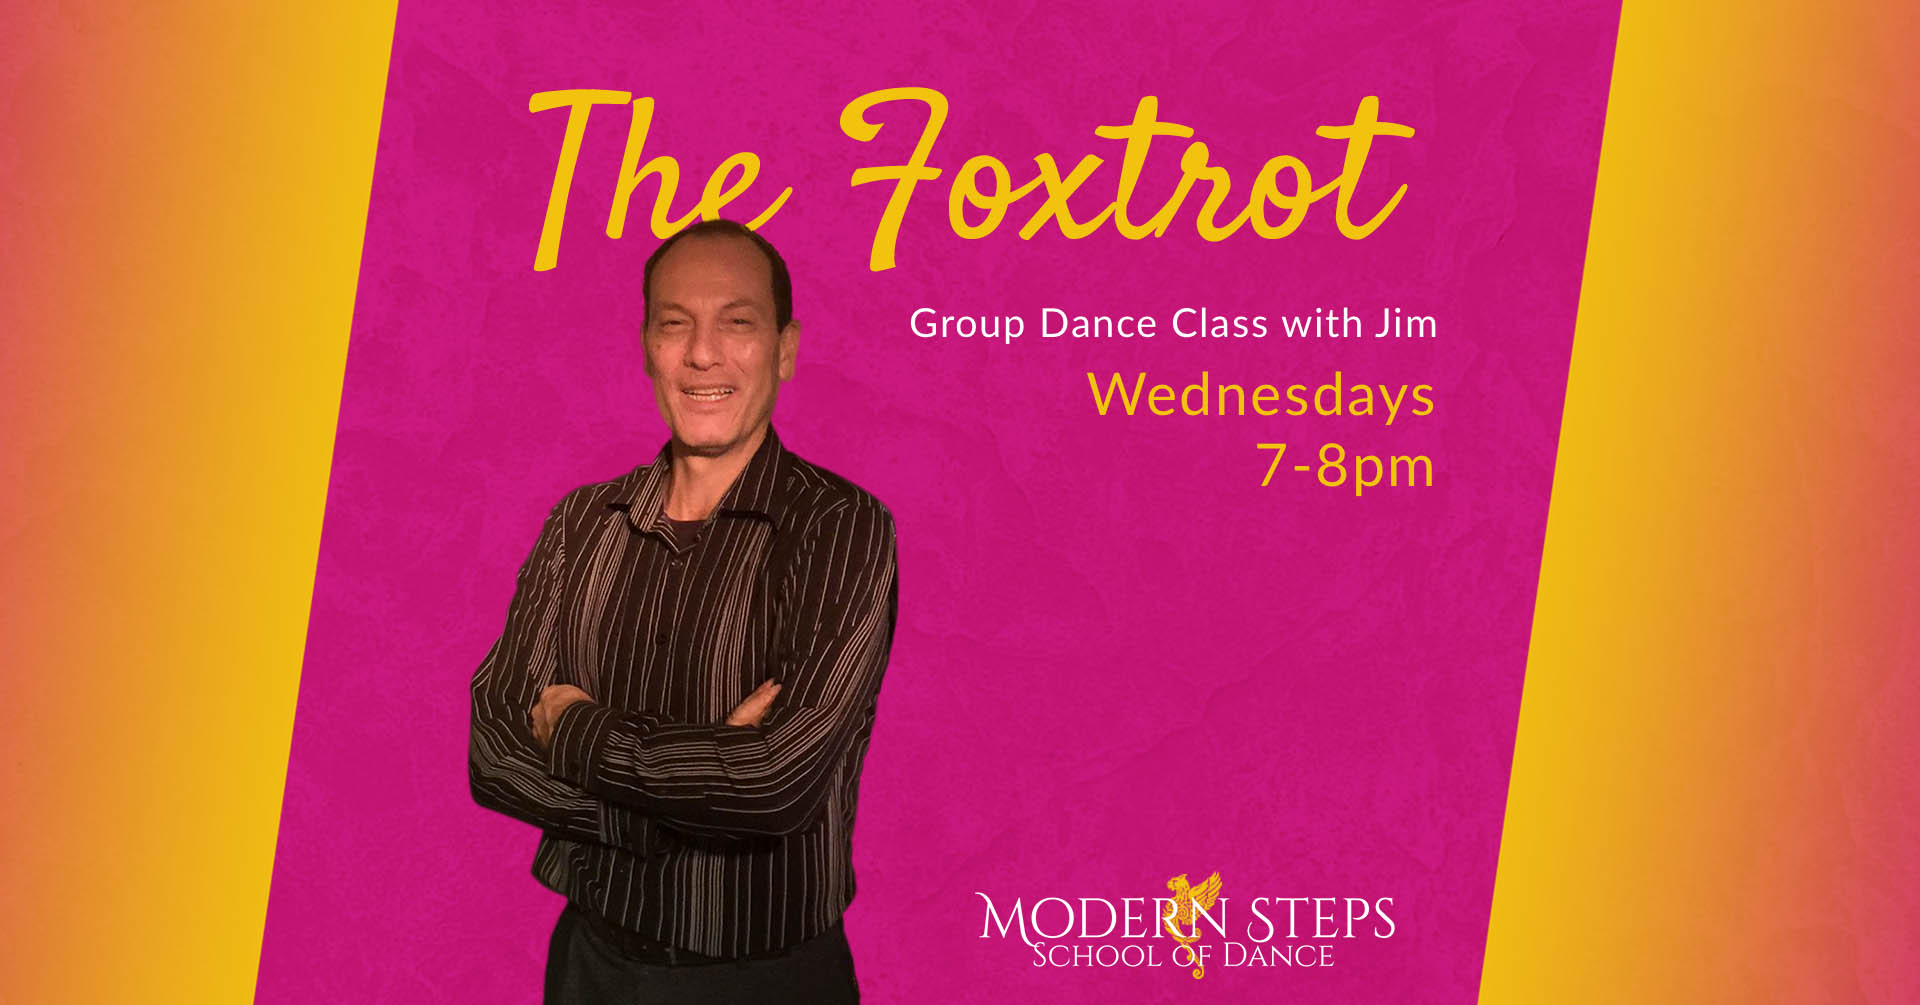 Naples Ballroom Dance Lessons - The Foxtrot - Modern Steps School of Dance - Naples Florida - Naples Florida Things to Do